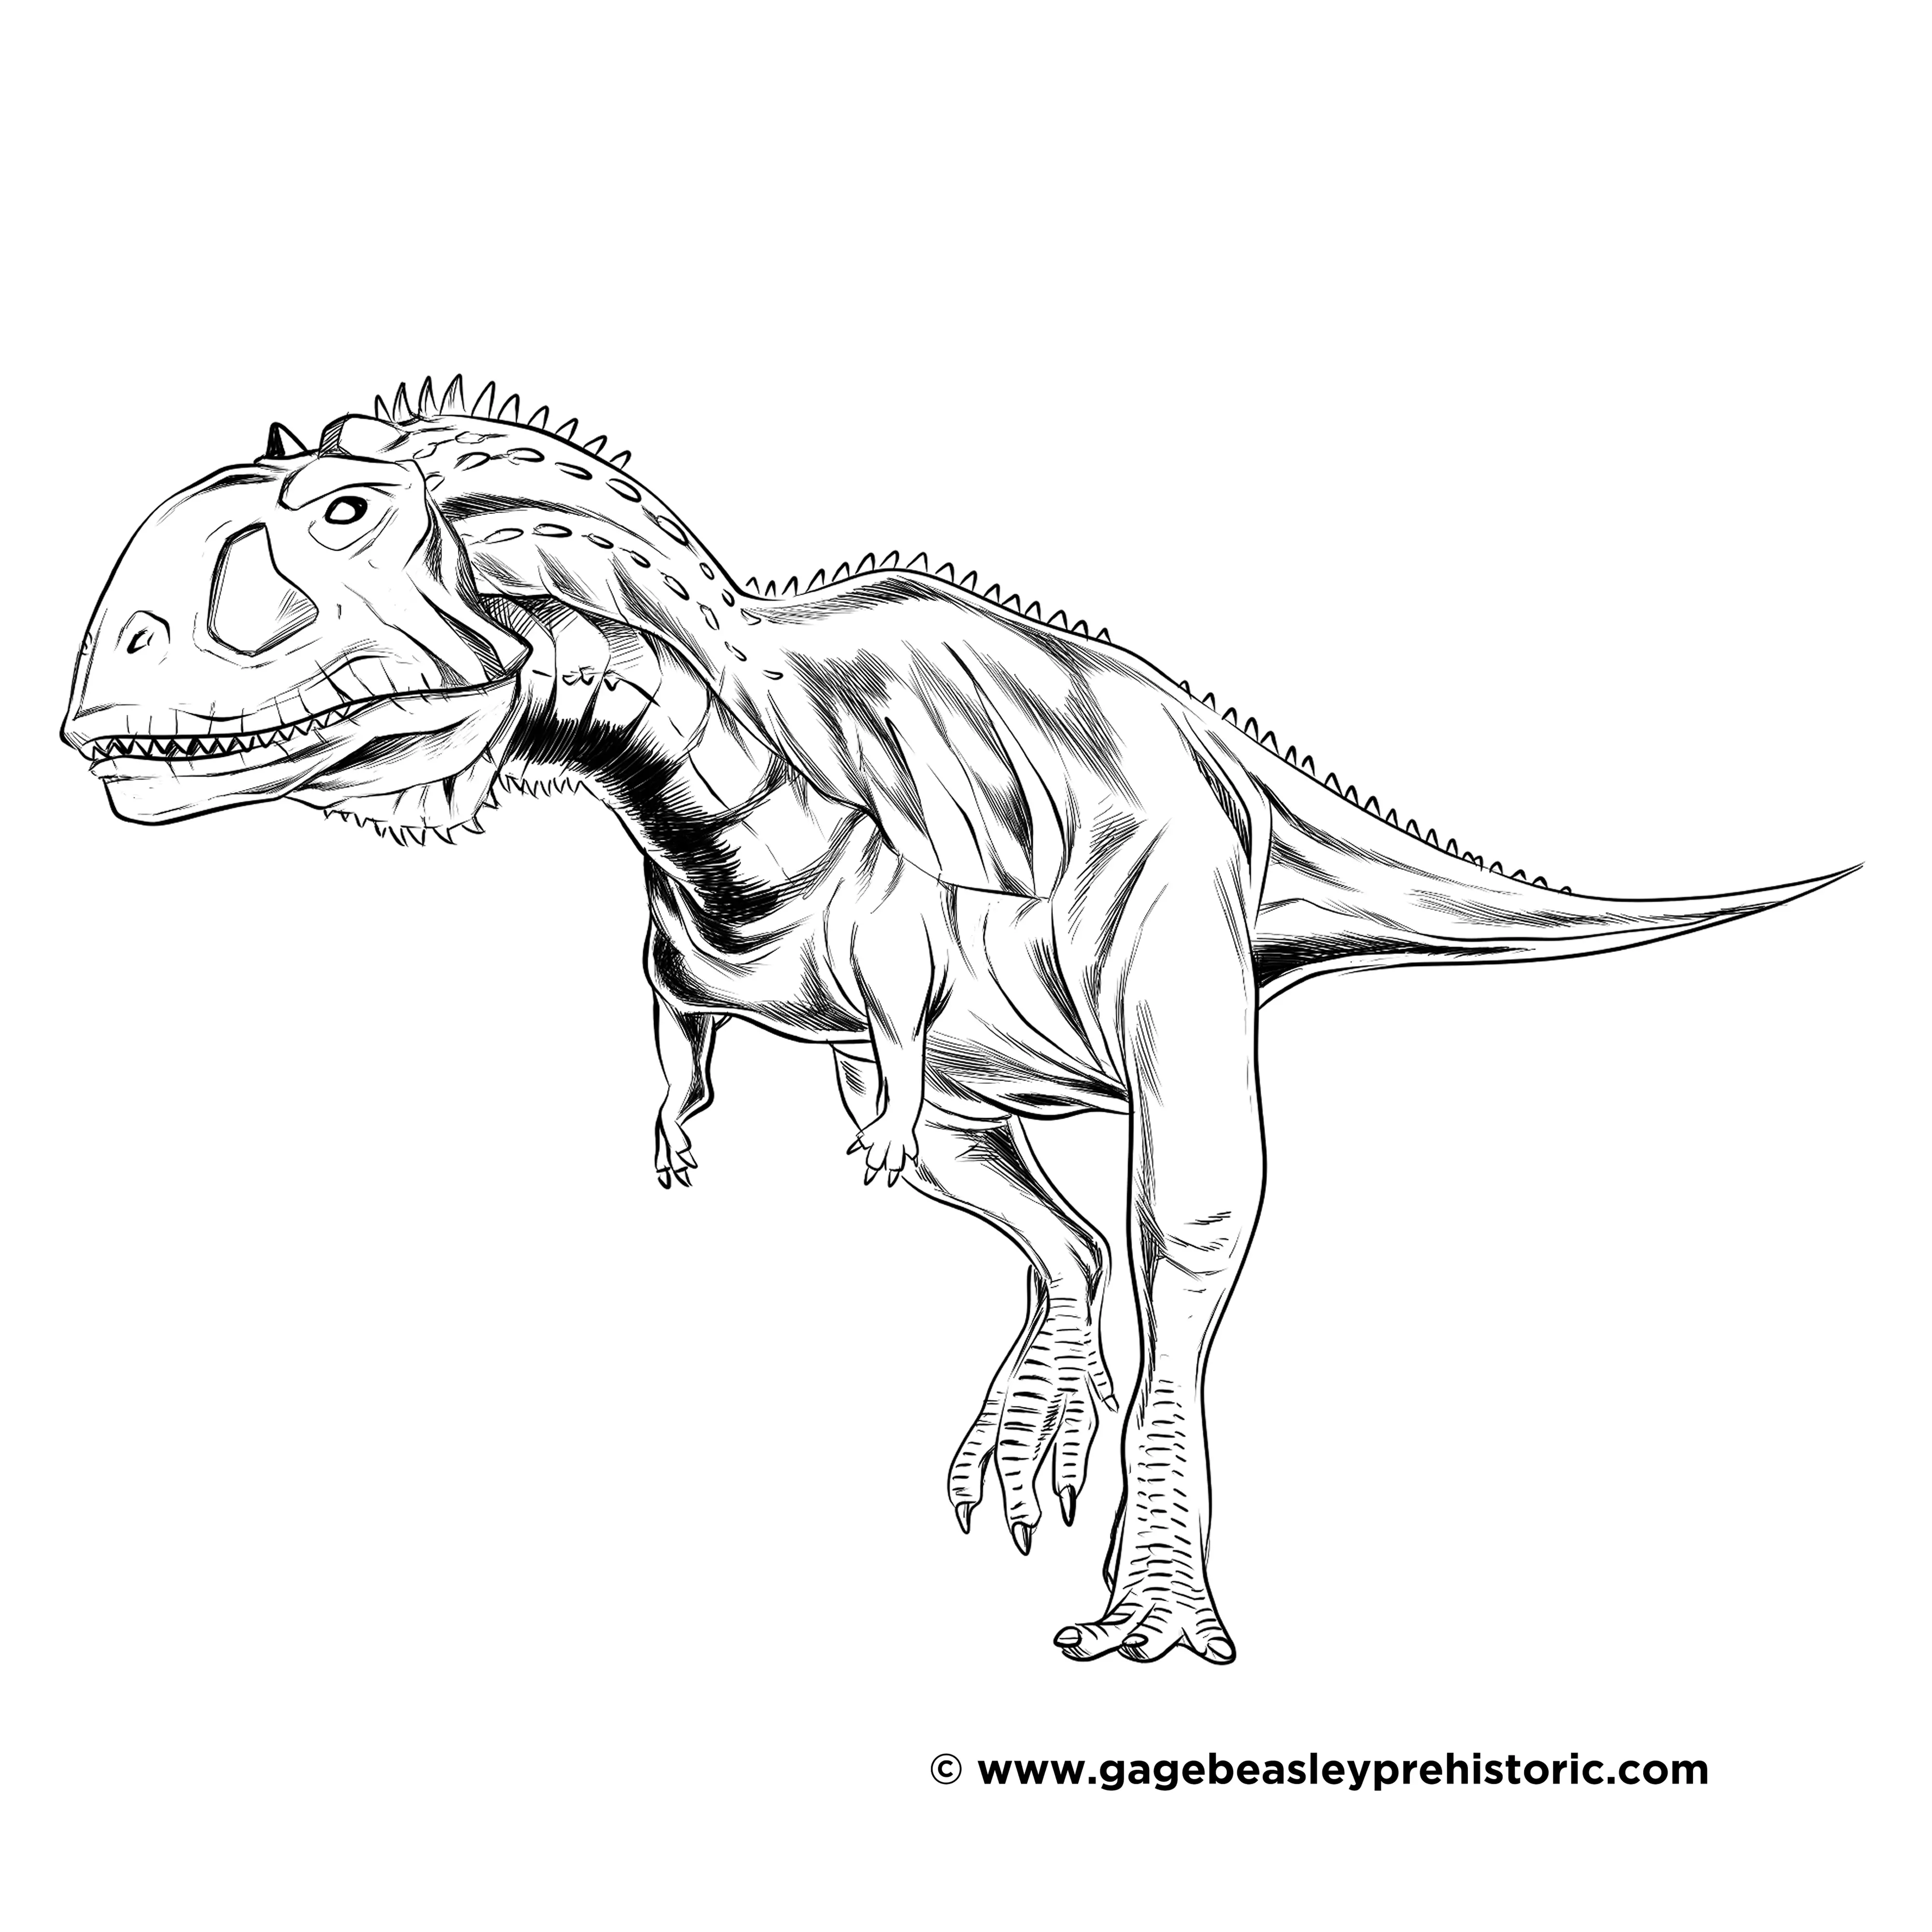 majungasaurus size